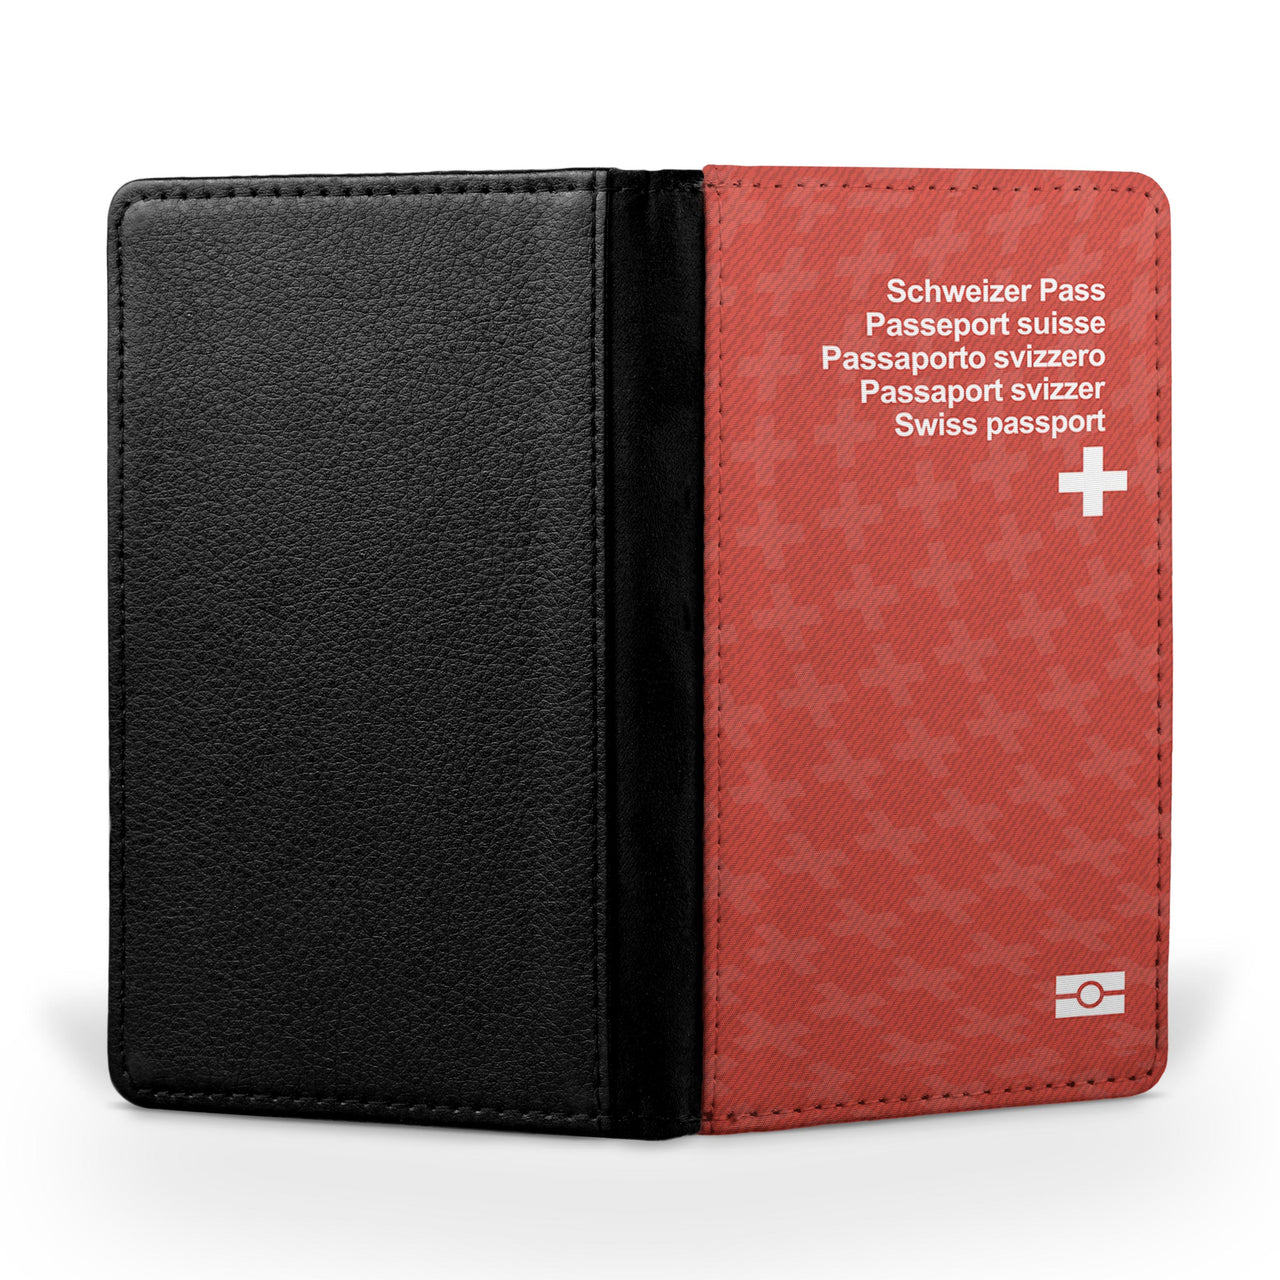 Switzerland Passport Designed Passport & Travel Cases